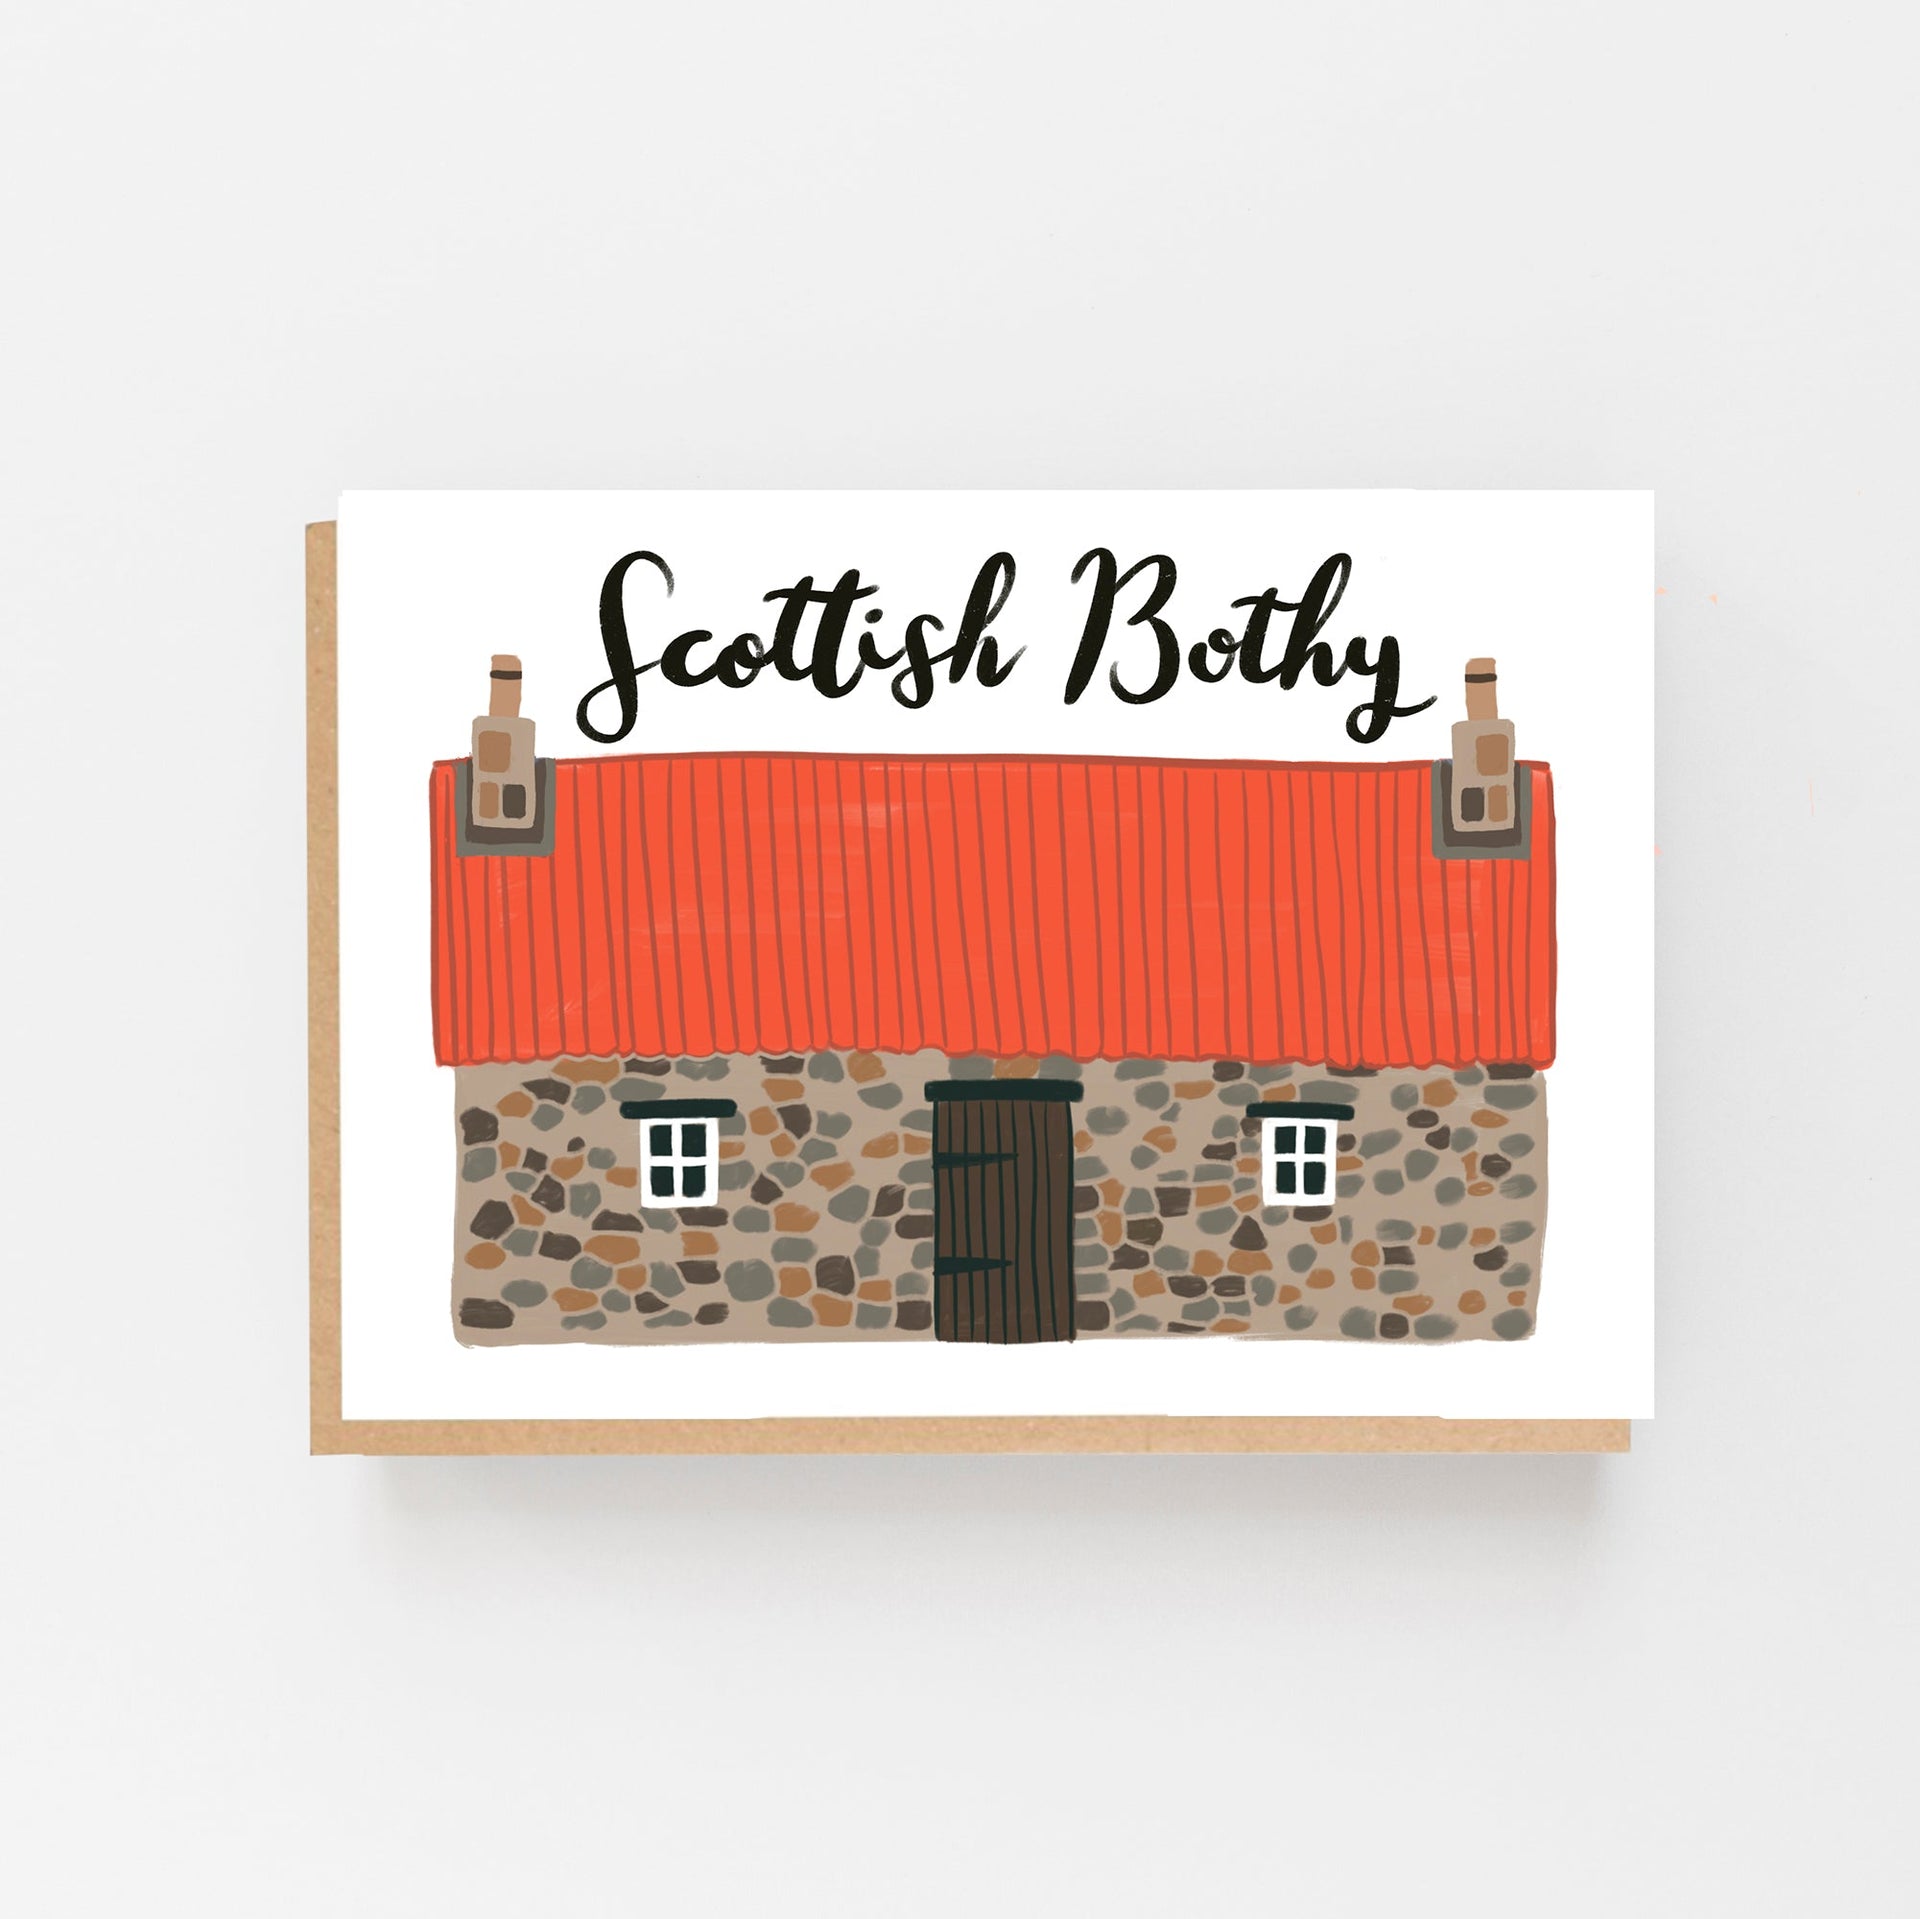 Scottish Bothy - Made Scotland